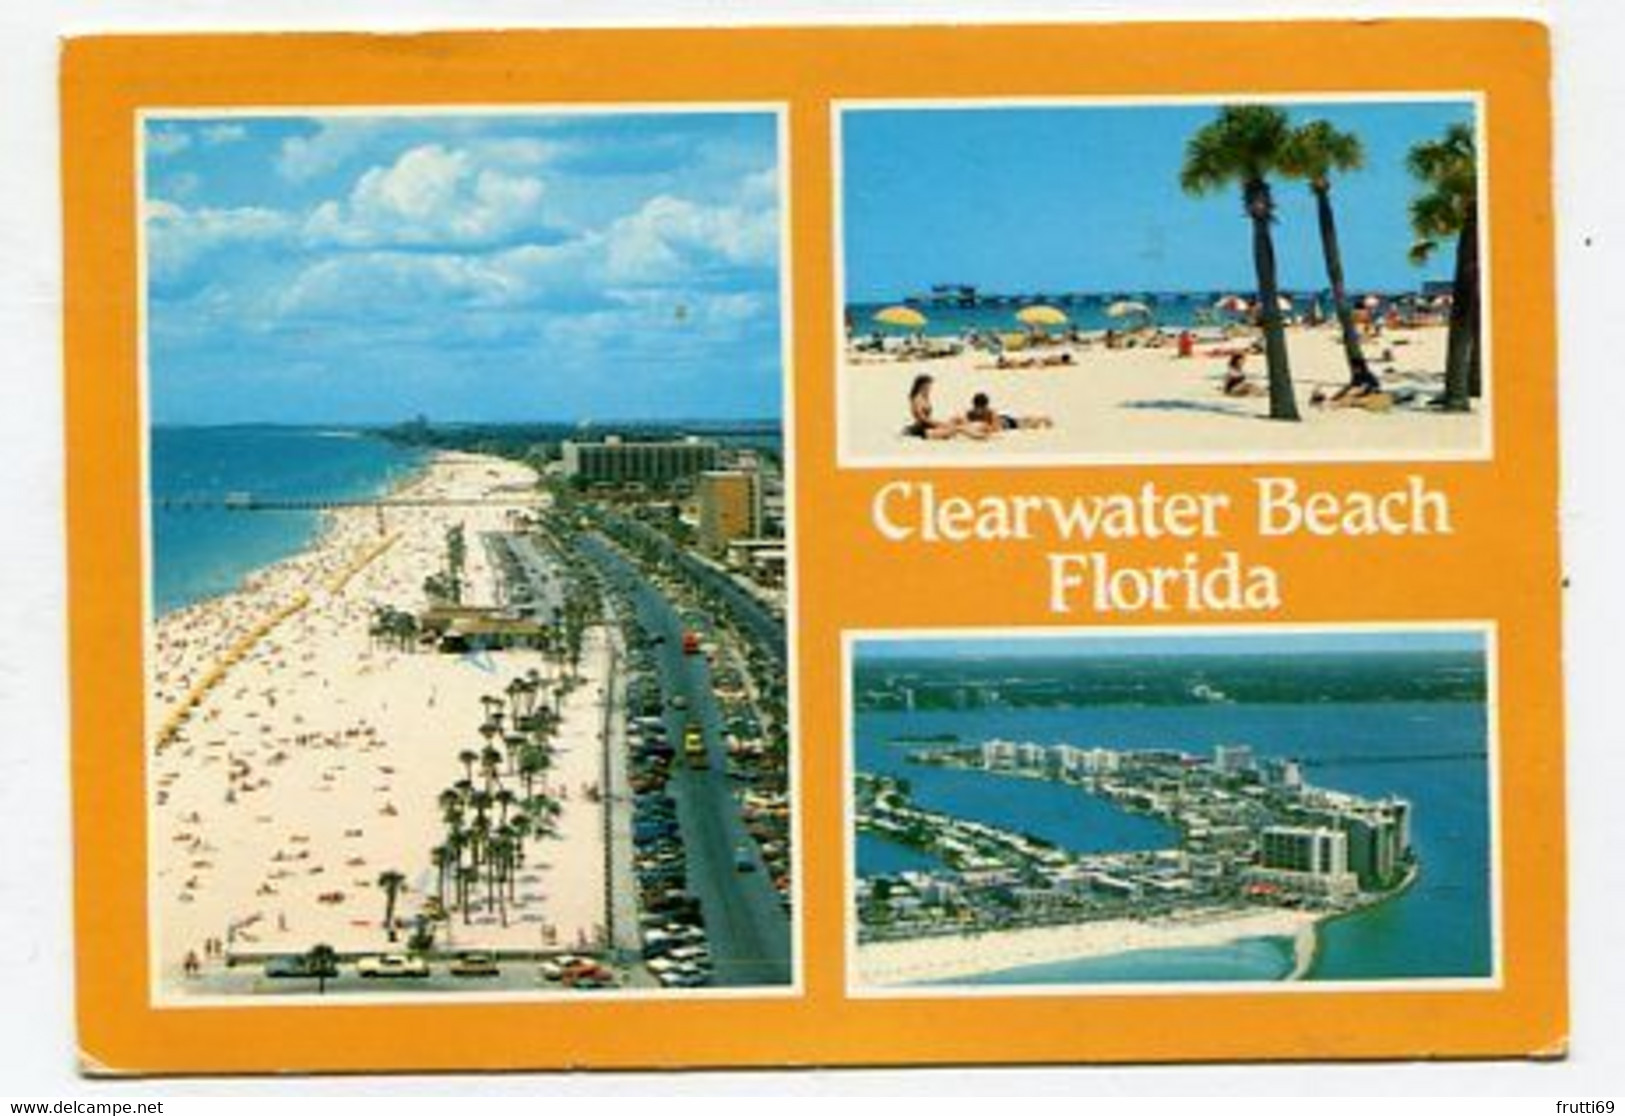 AK 016916 USA - Florida - Clearwater Beach - Clearwater